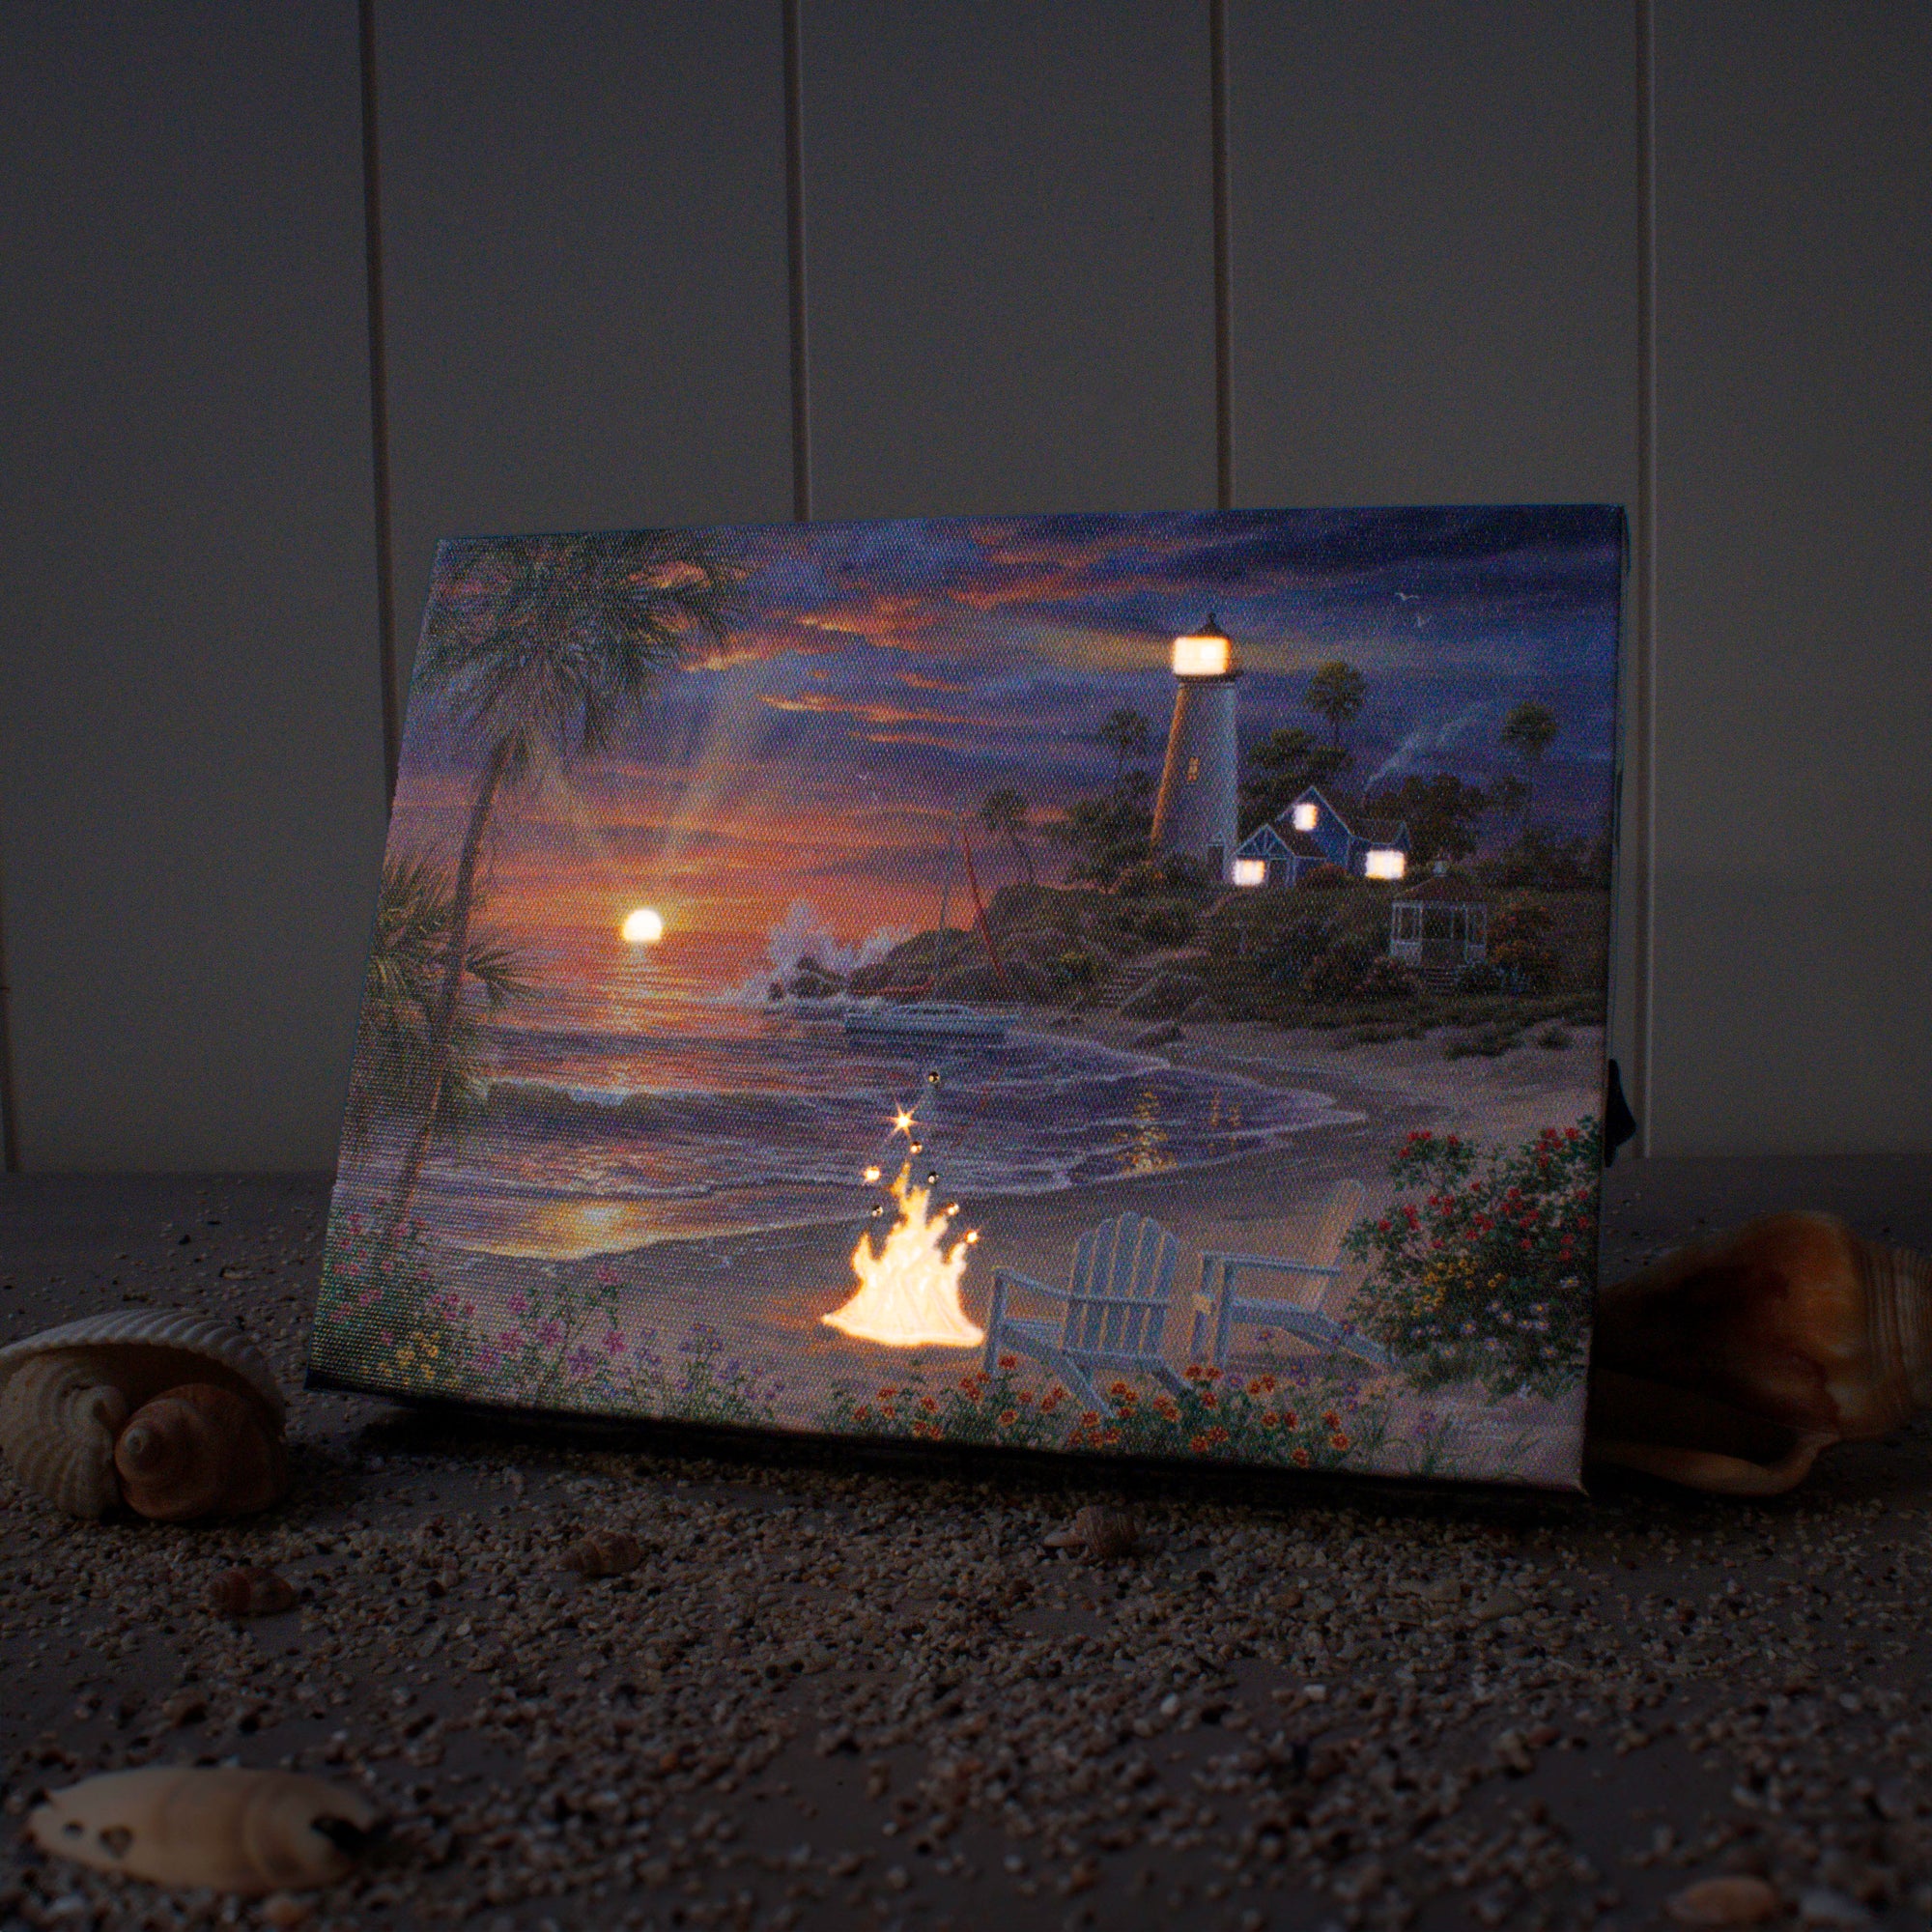 Honeymoon Sunset 8x6 Lighted Tabletop Canvas